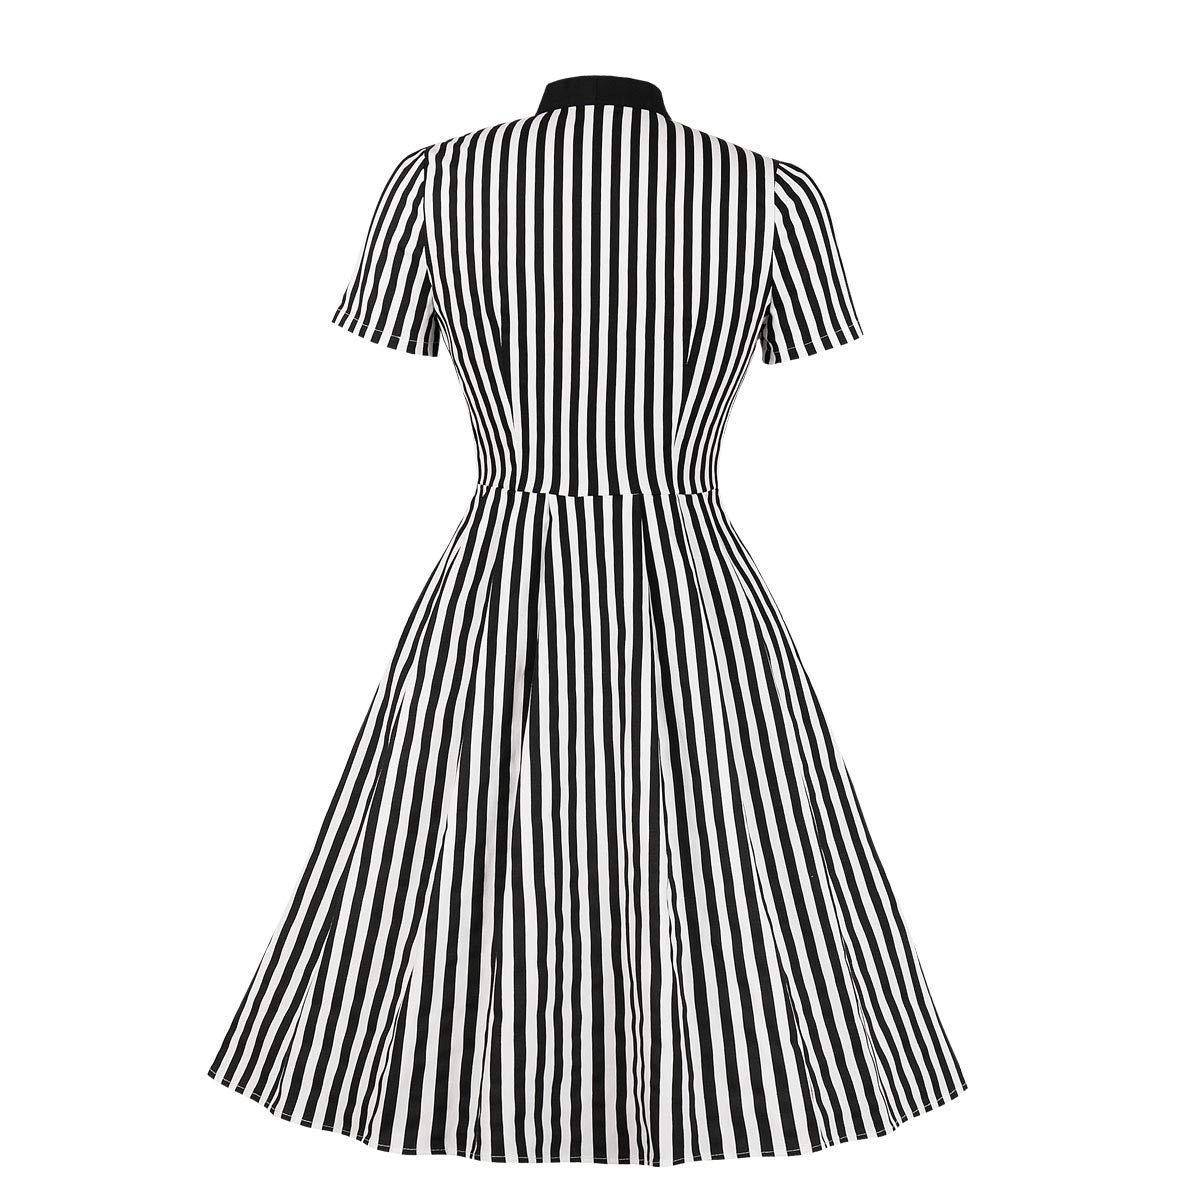 Wellwits Women's Stripes Print Tie Neck Pocket Vintage Button Down Shirt Dress